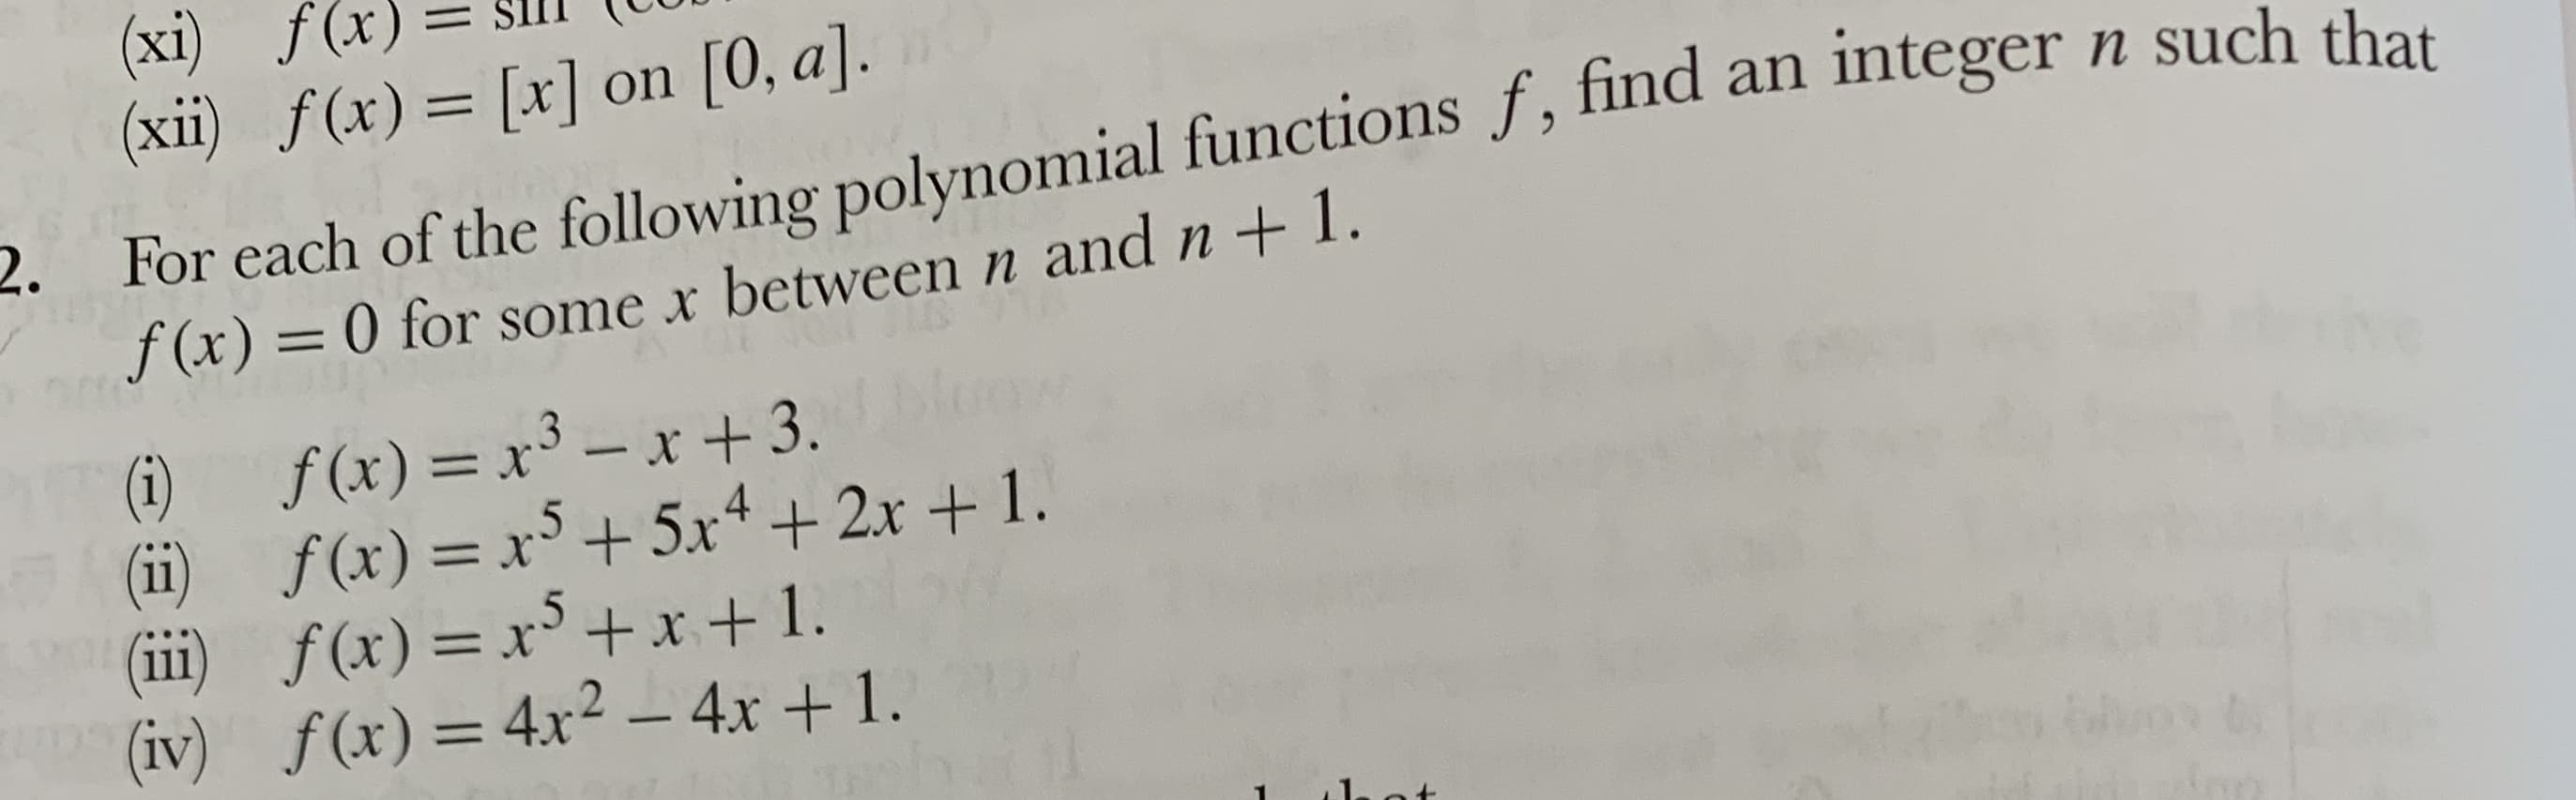 (xi)
f(x)=sin(
(xi) f(x) [r] on [0, a]
f(x) = 0 for some x between n and n + 1.
(ii) f(x)-5r4 +2r +1.
2. For cach of the following polynomial functions f, fi
nd an integer n such that
(iii)
f(x) = x5 + x + 1.
(iv) f(x) 4r24r + 1.
